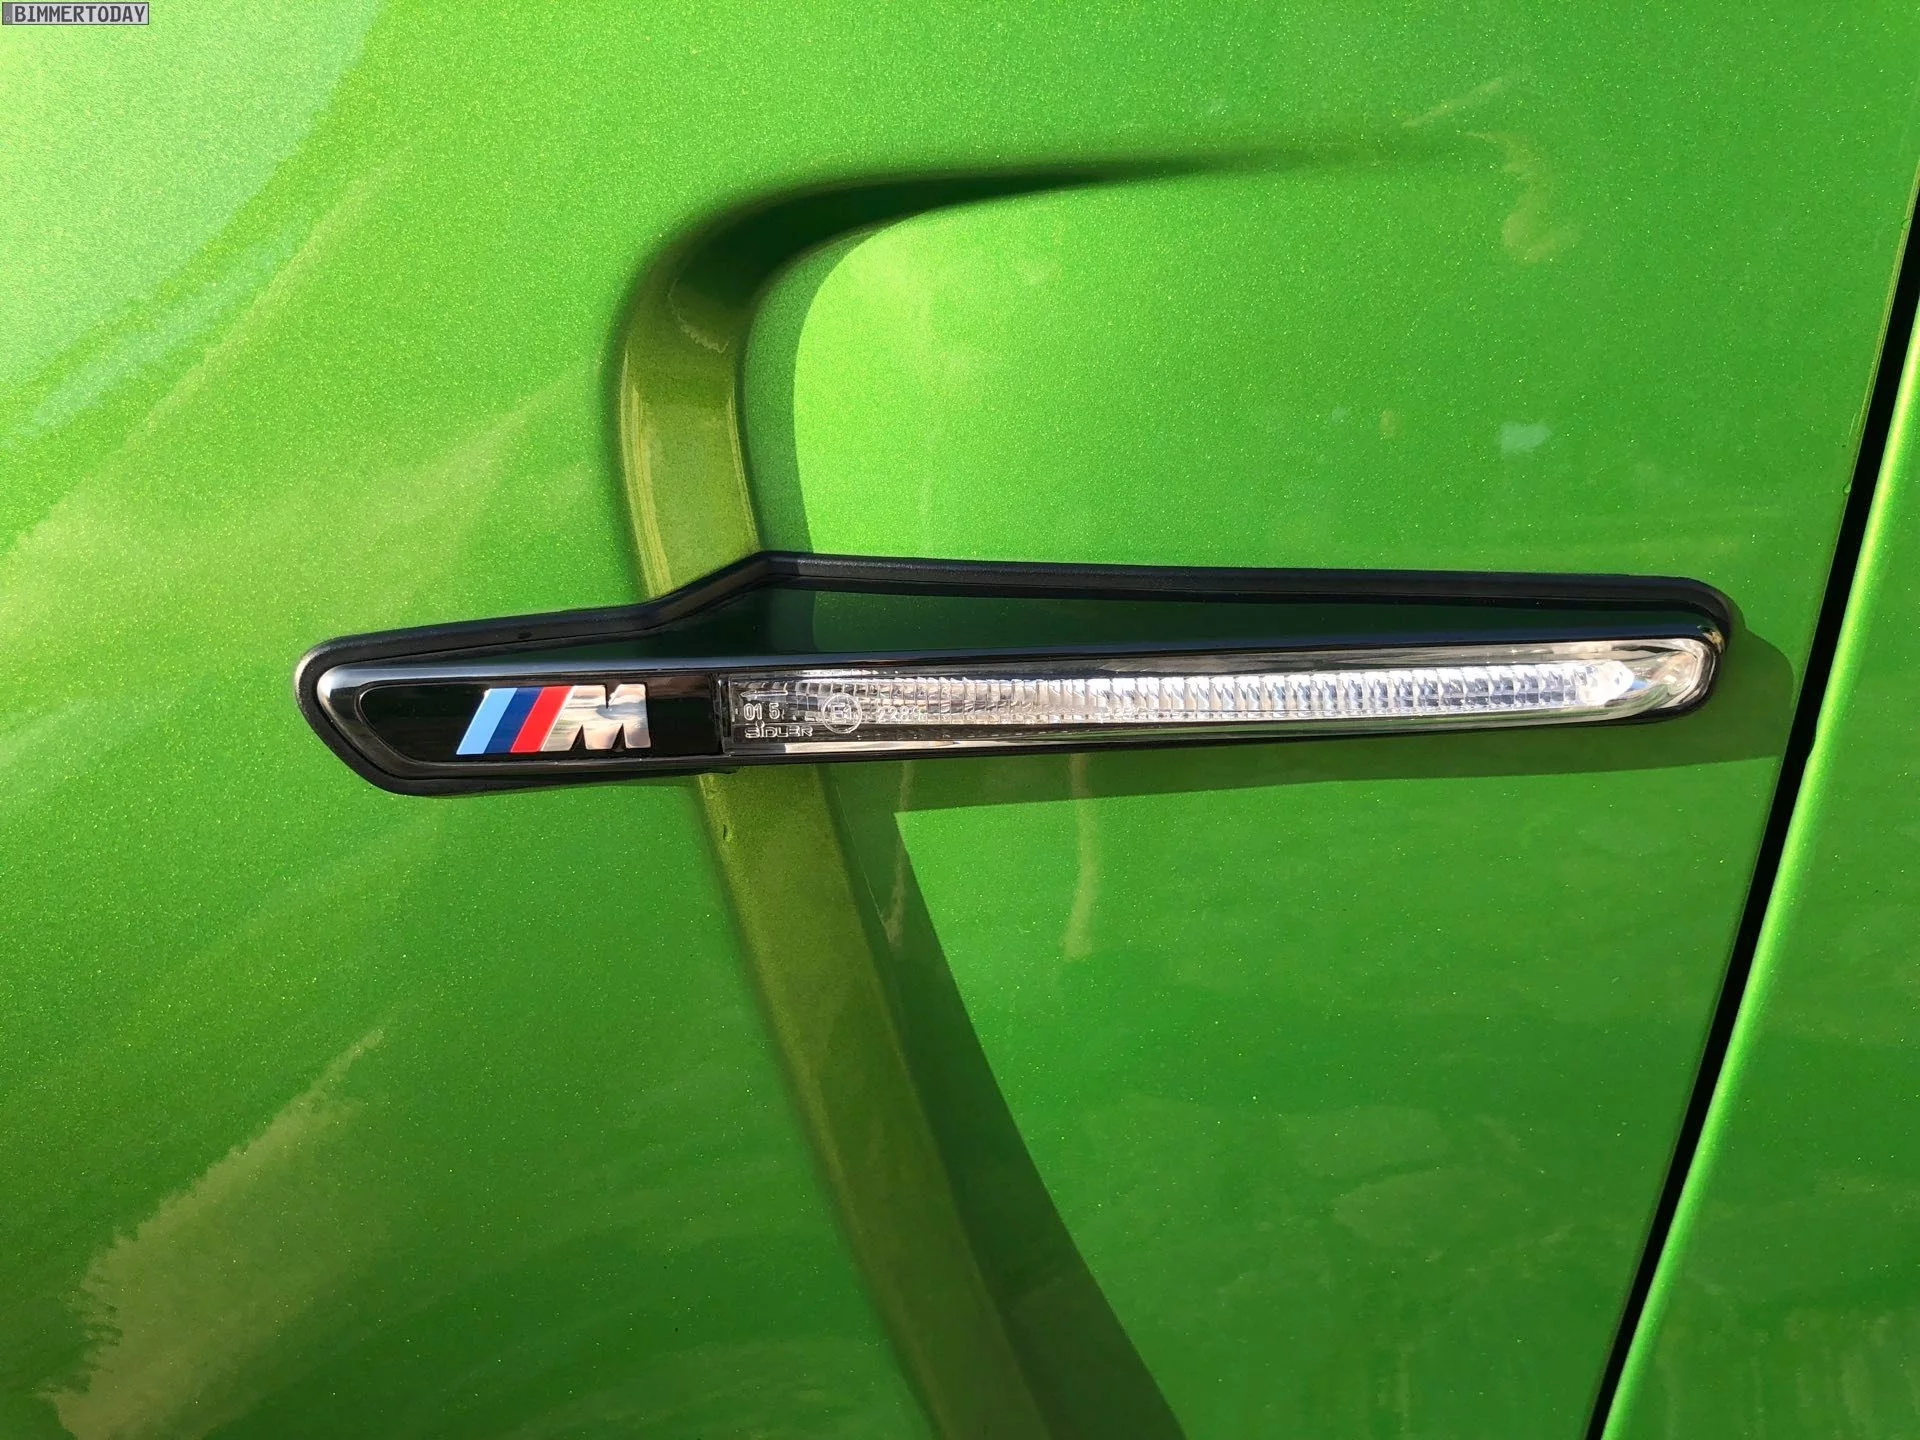 Java Green BMW 1 Series